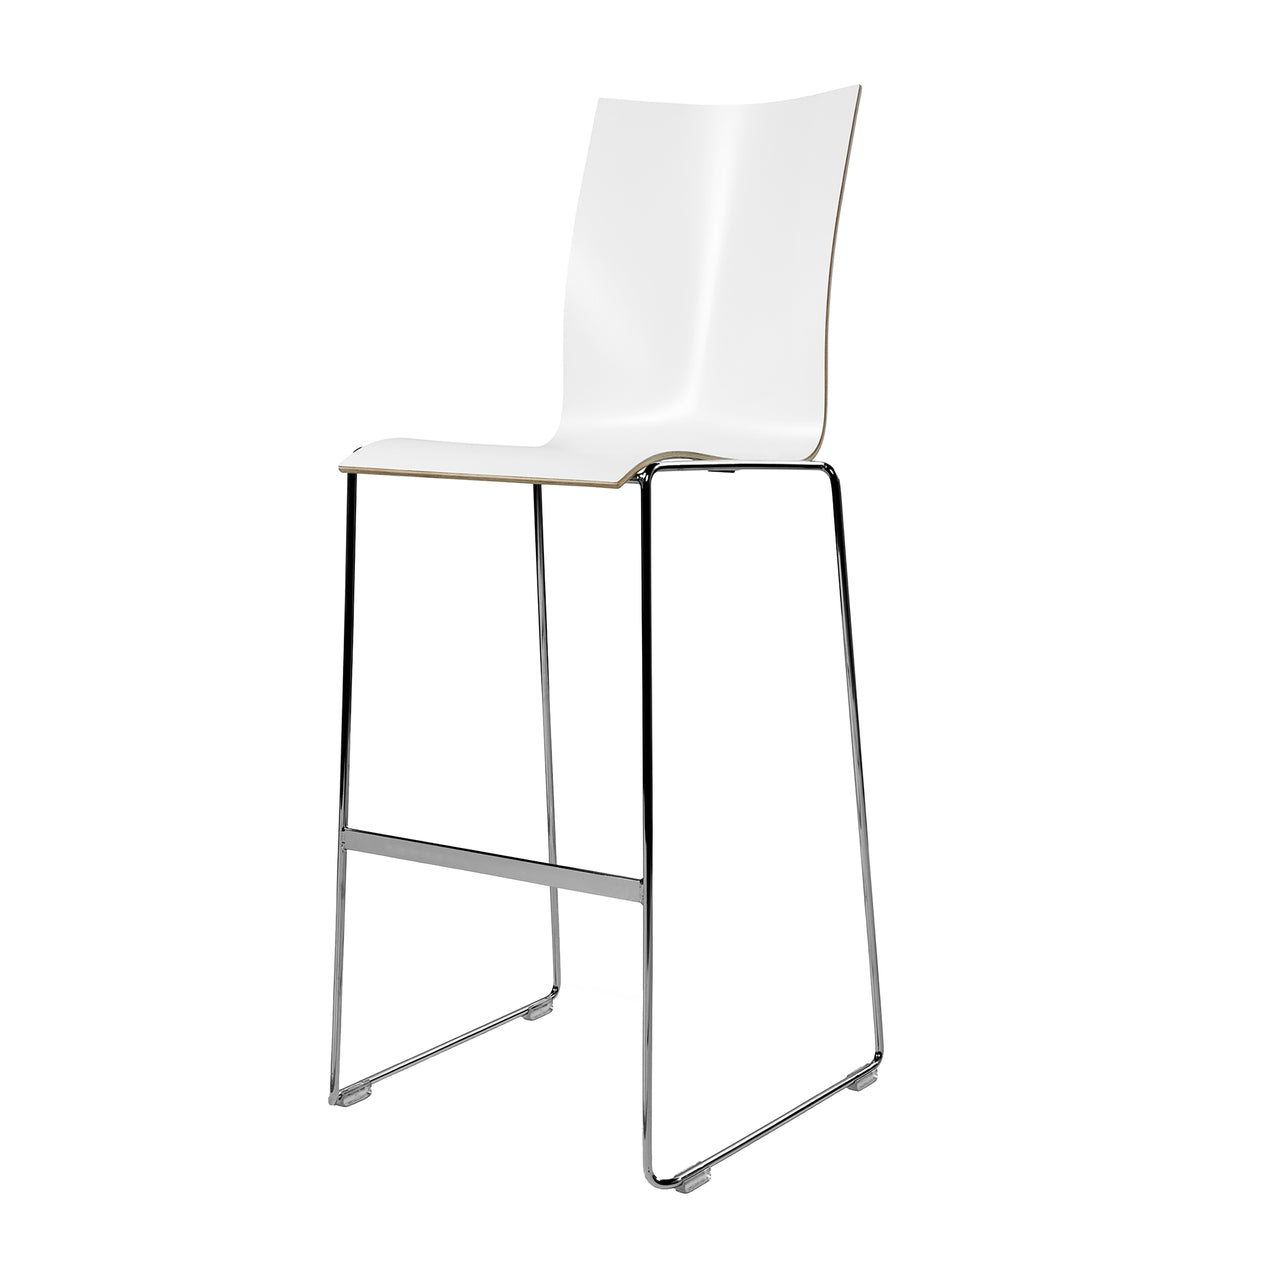 Chairik 118 High Bar Chair: Sled Base + Melamine - White + Polished Chrome